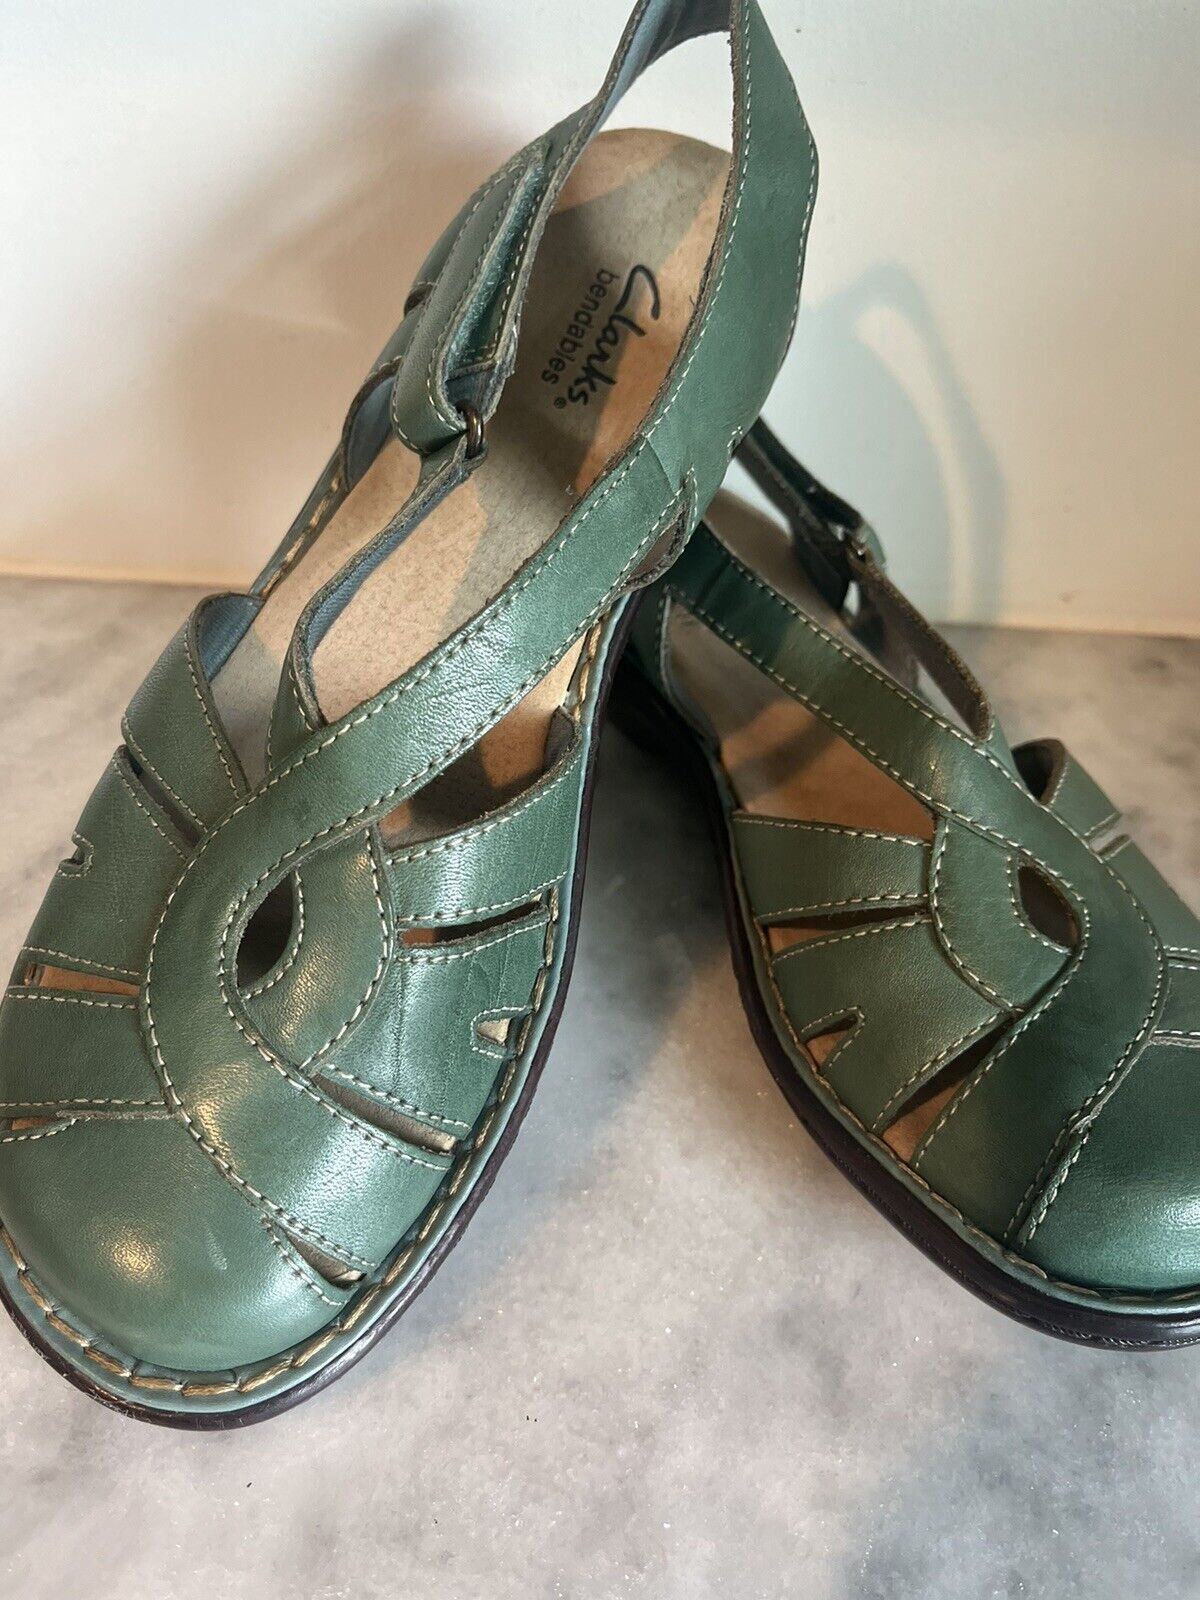 Clarks Bendables Sandals Turquoise Size 7M - image 1